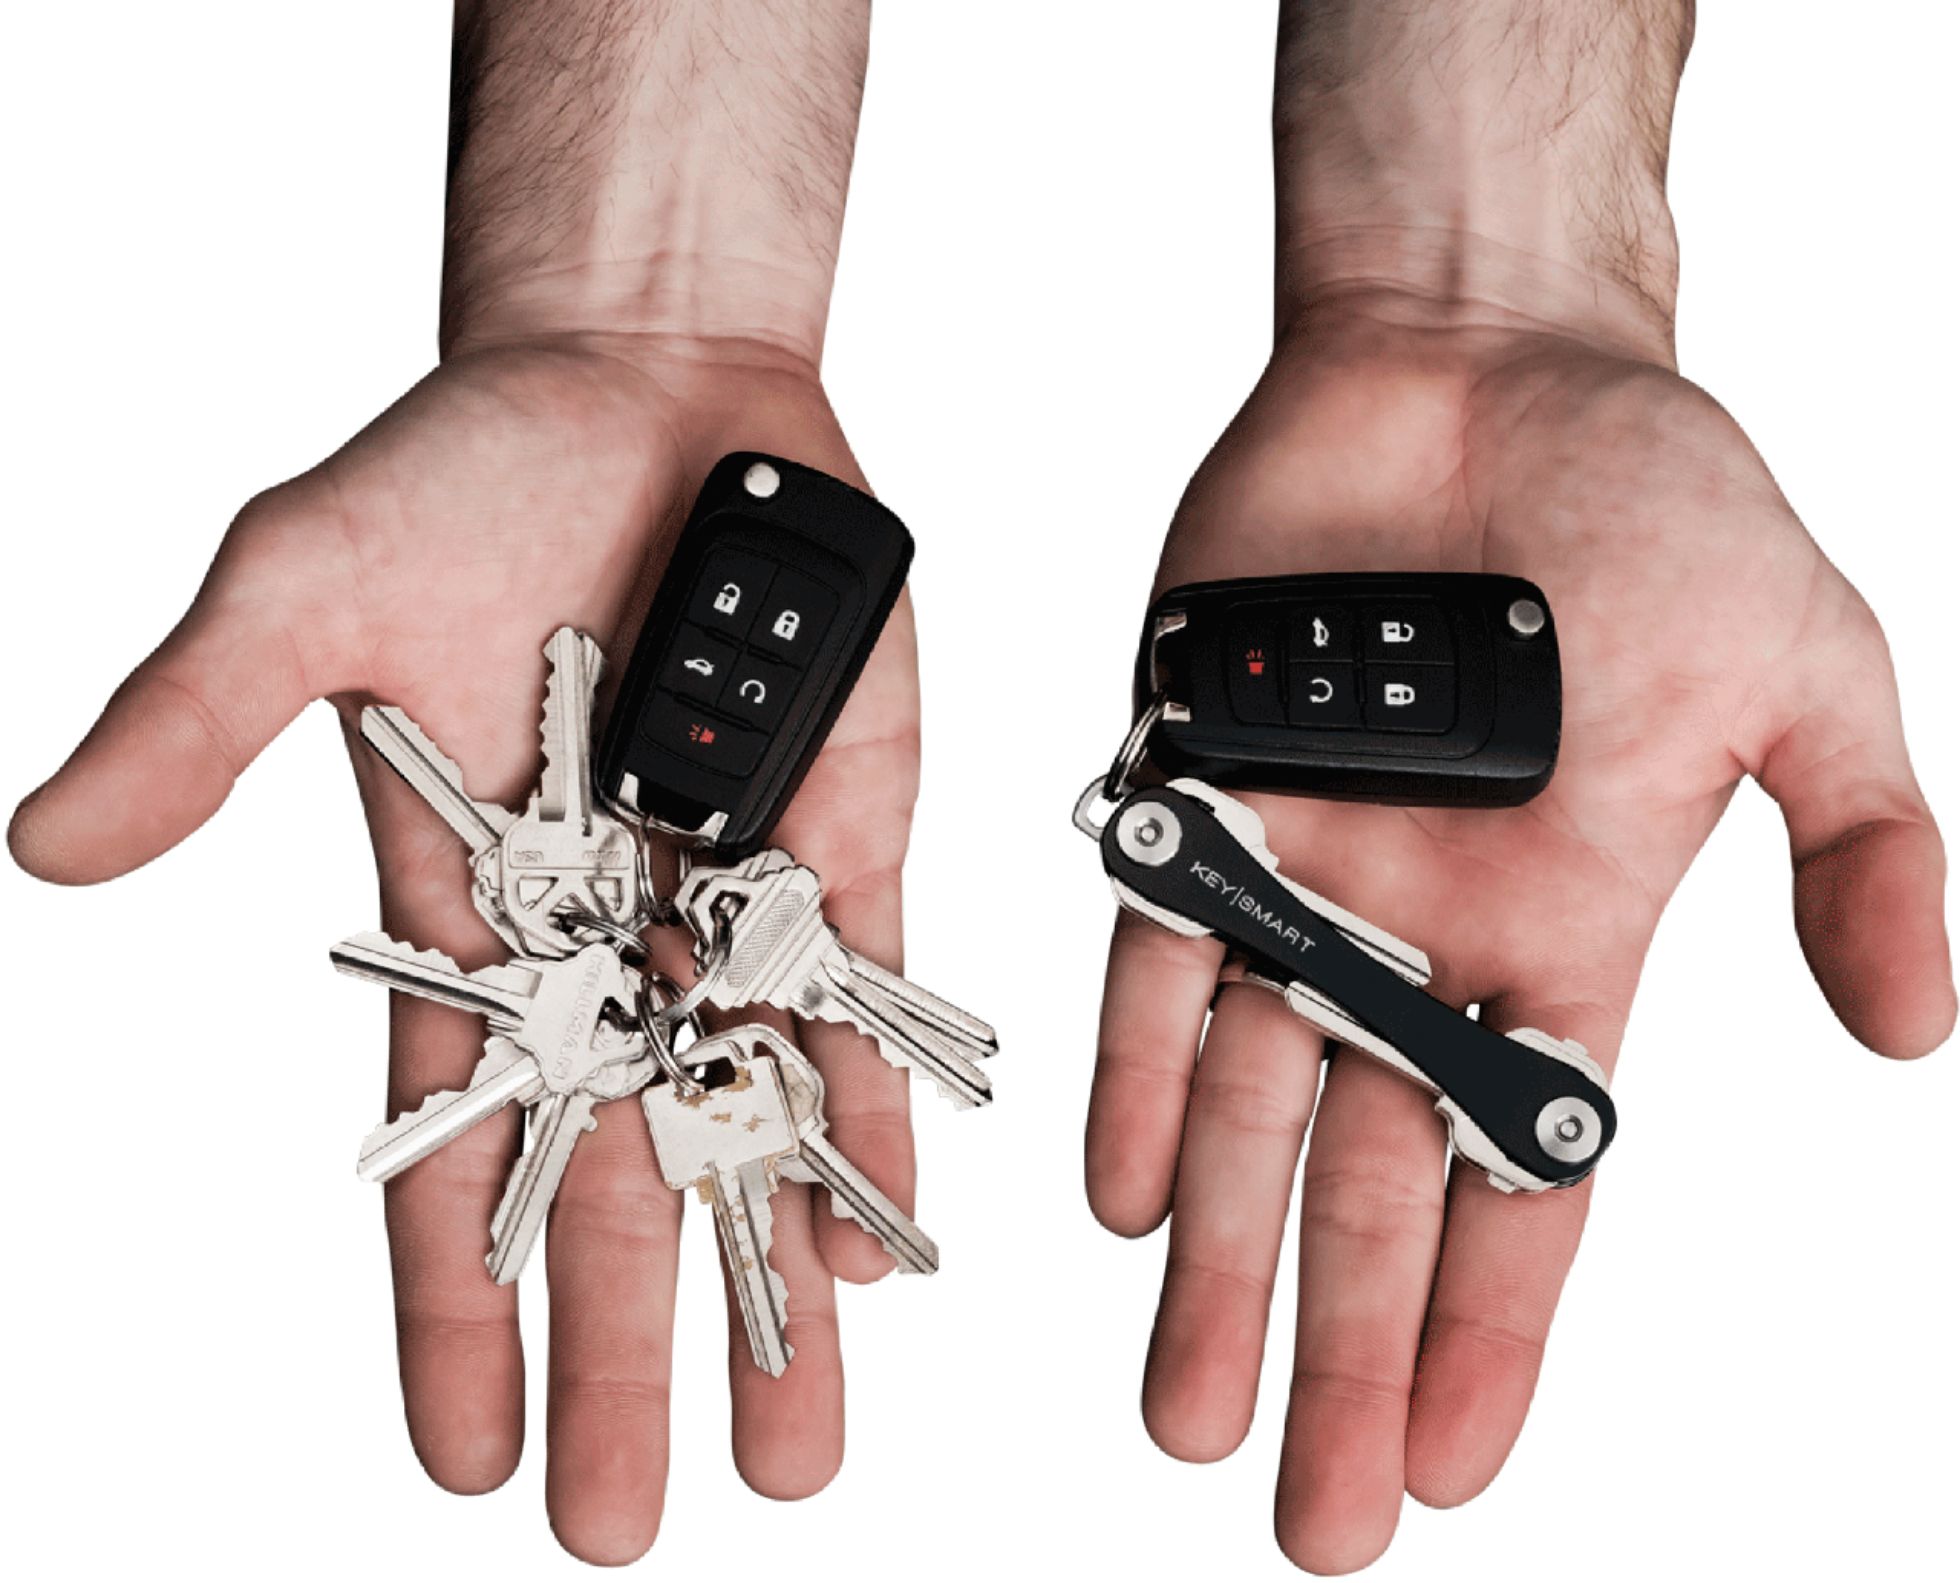 Keysmart Original Compact Key Holder Black